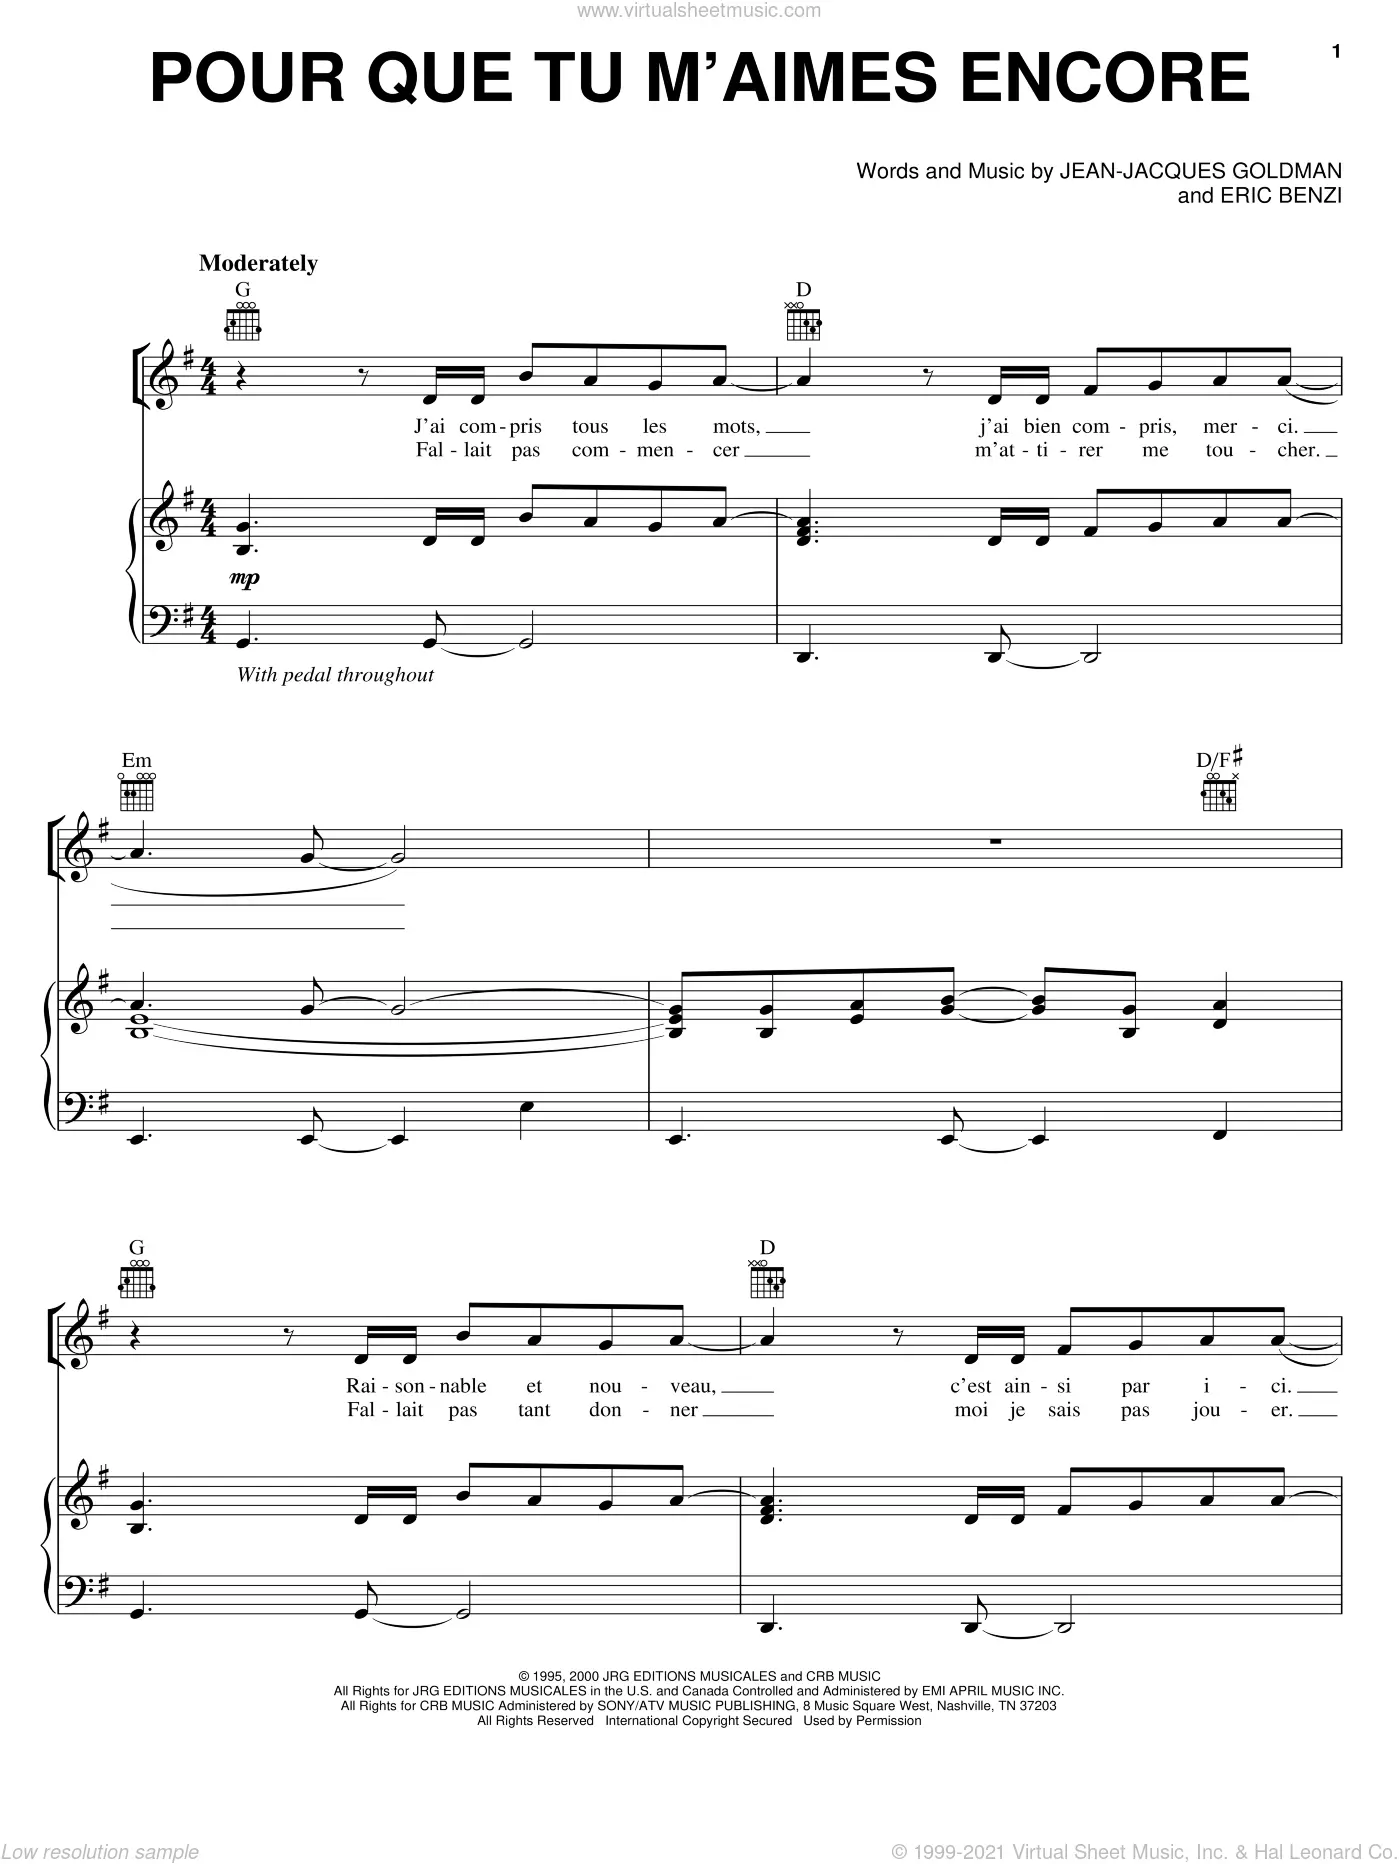 Pour Que Tu M Aime Encore Tab Pour Que Tu M'Aimes Encore Sheet Music by Il Divo - Piano/Vocal/Guitar Sheet  Music to download and print